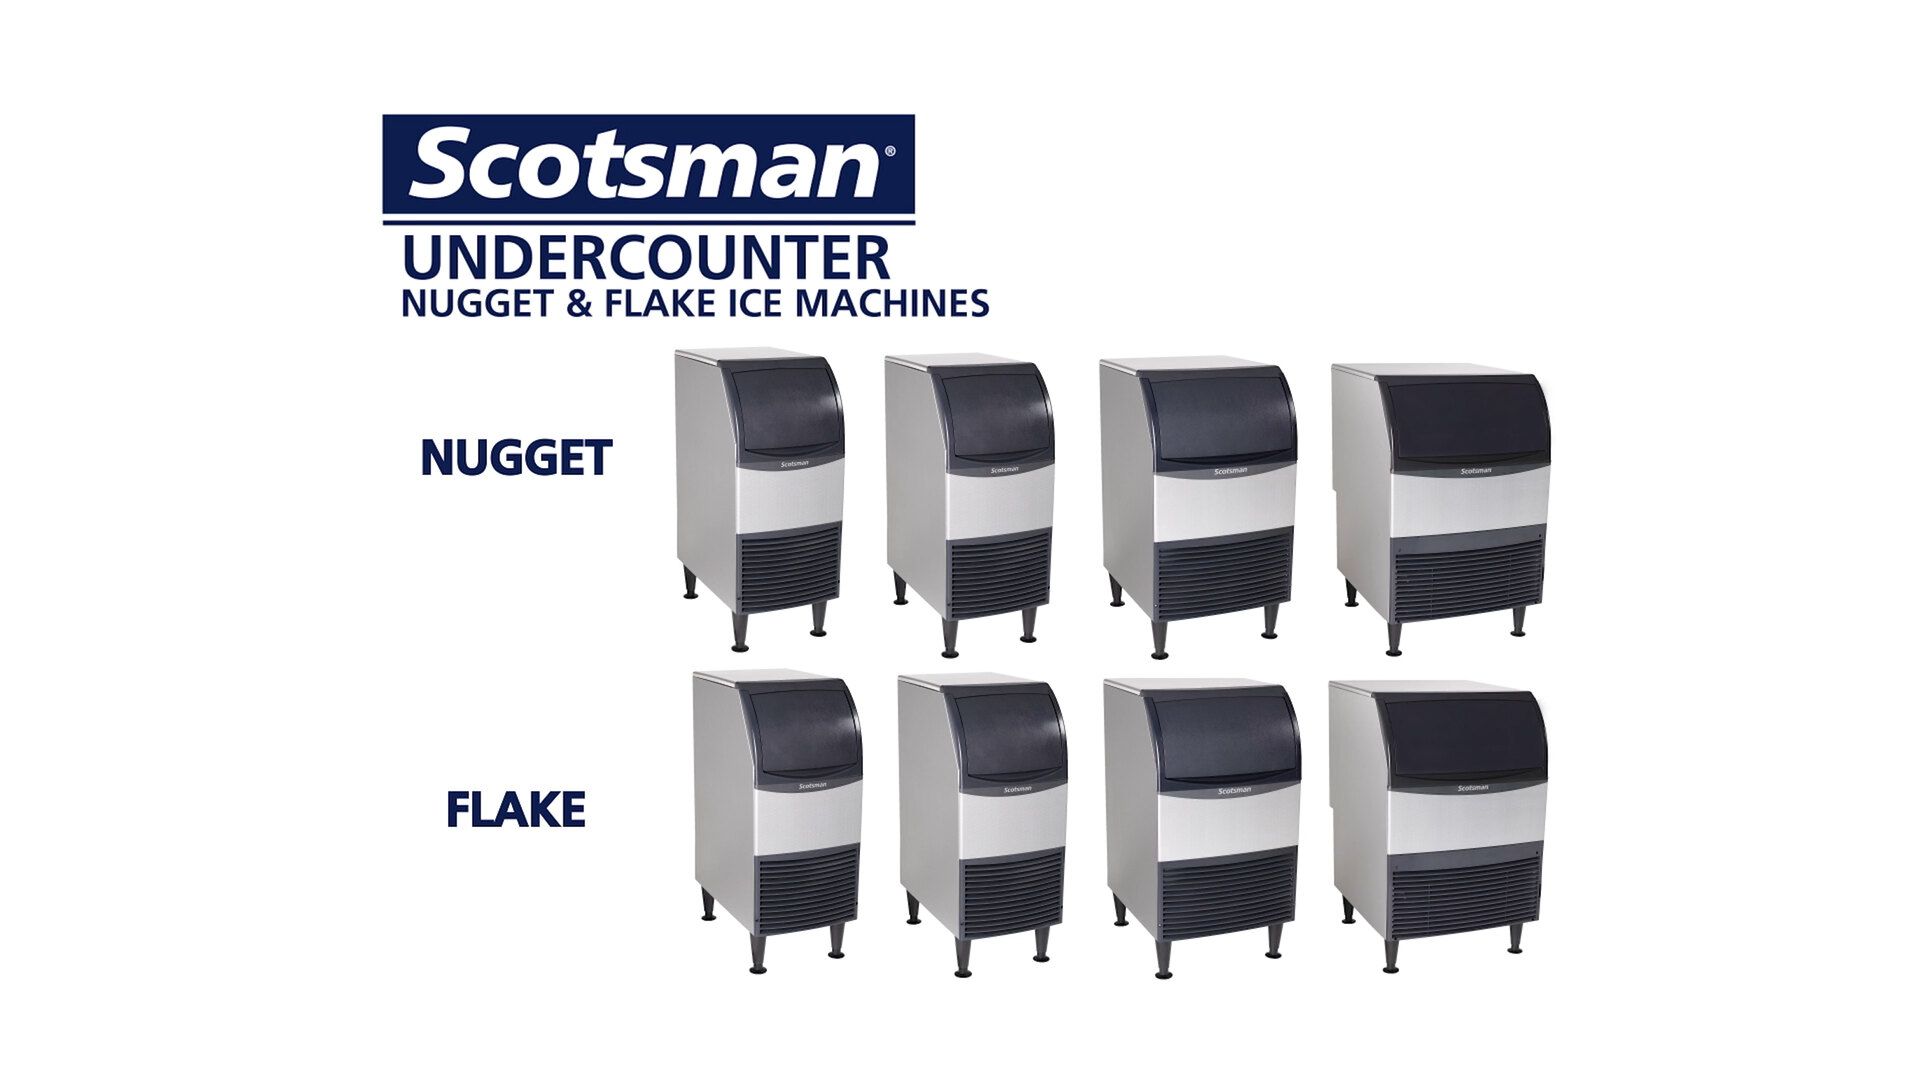 Undercounterfamily  Scotsman Ice Systems